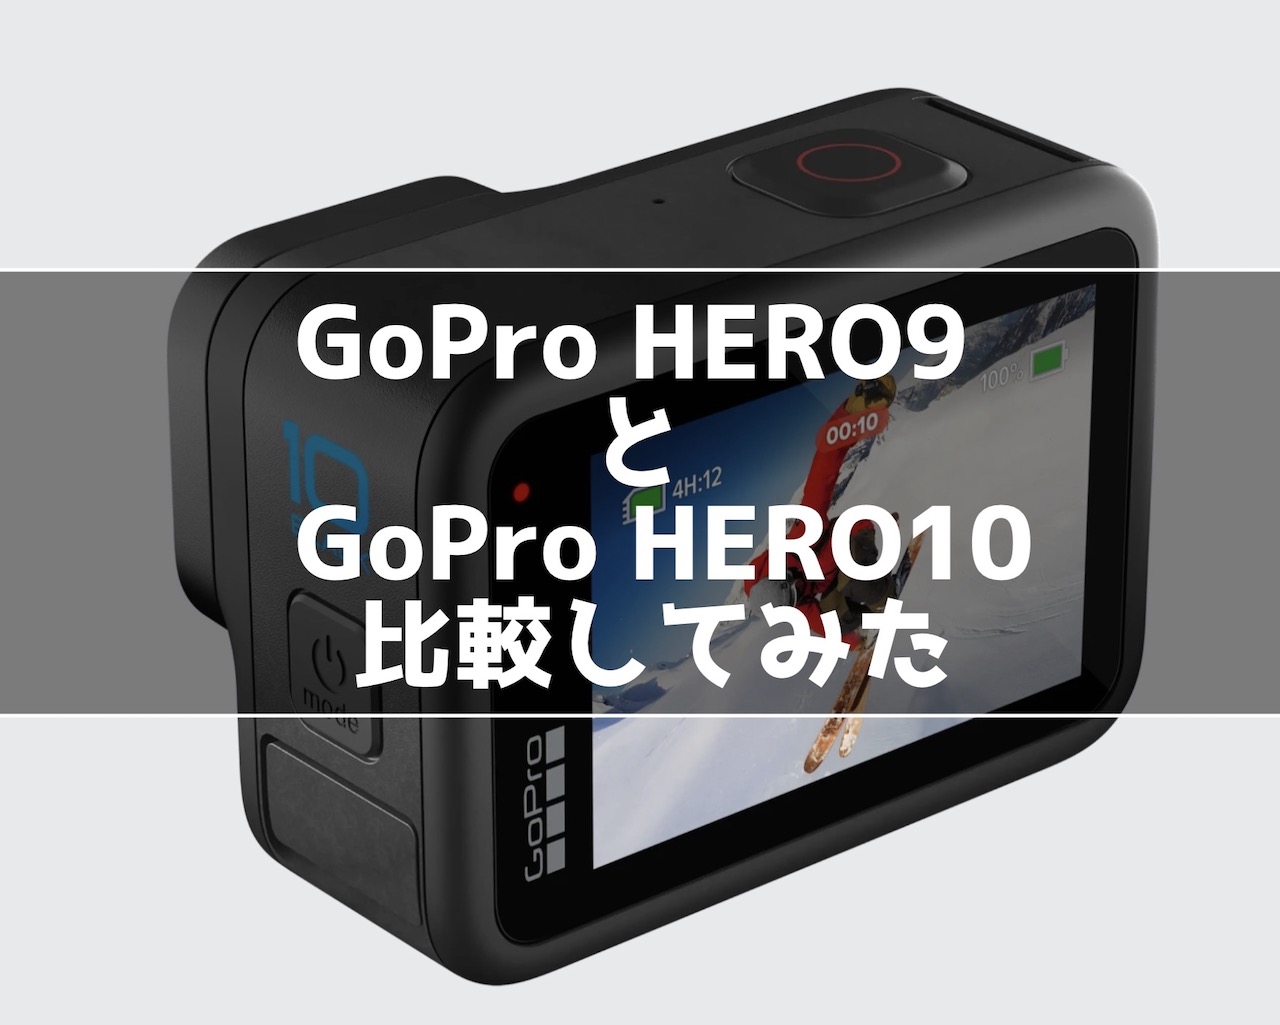 GoPro HERO9と10の違い